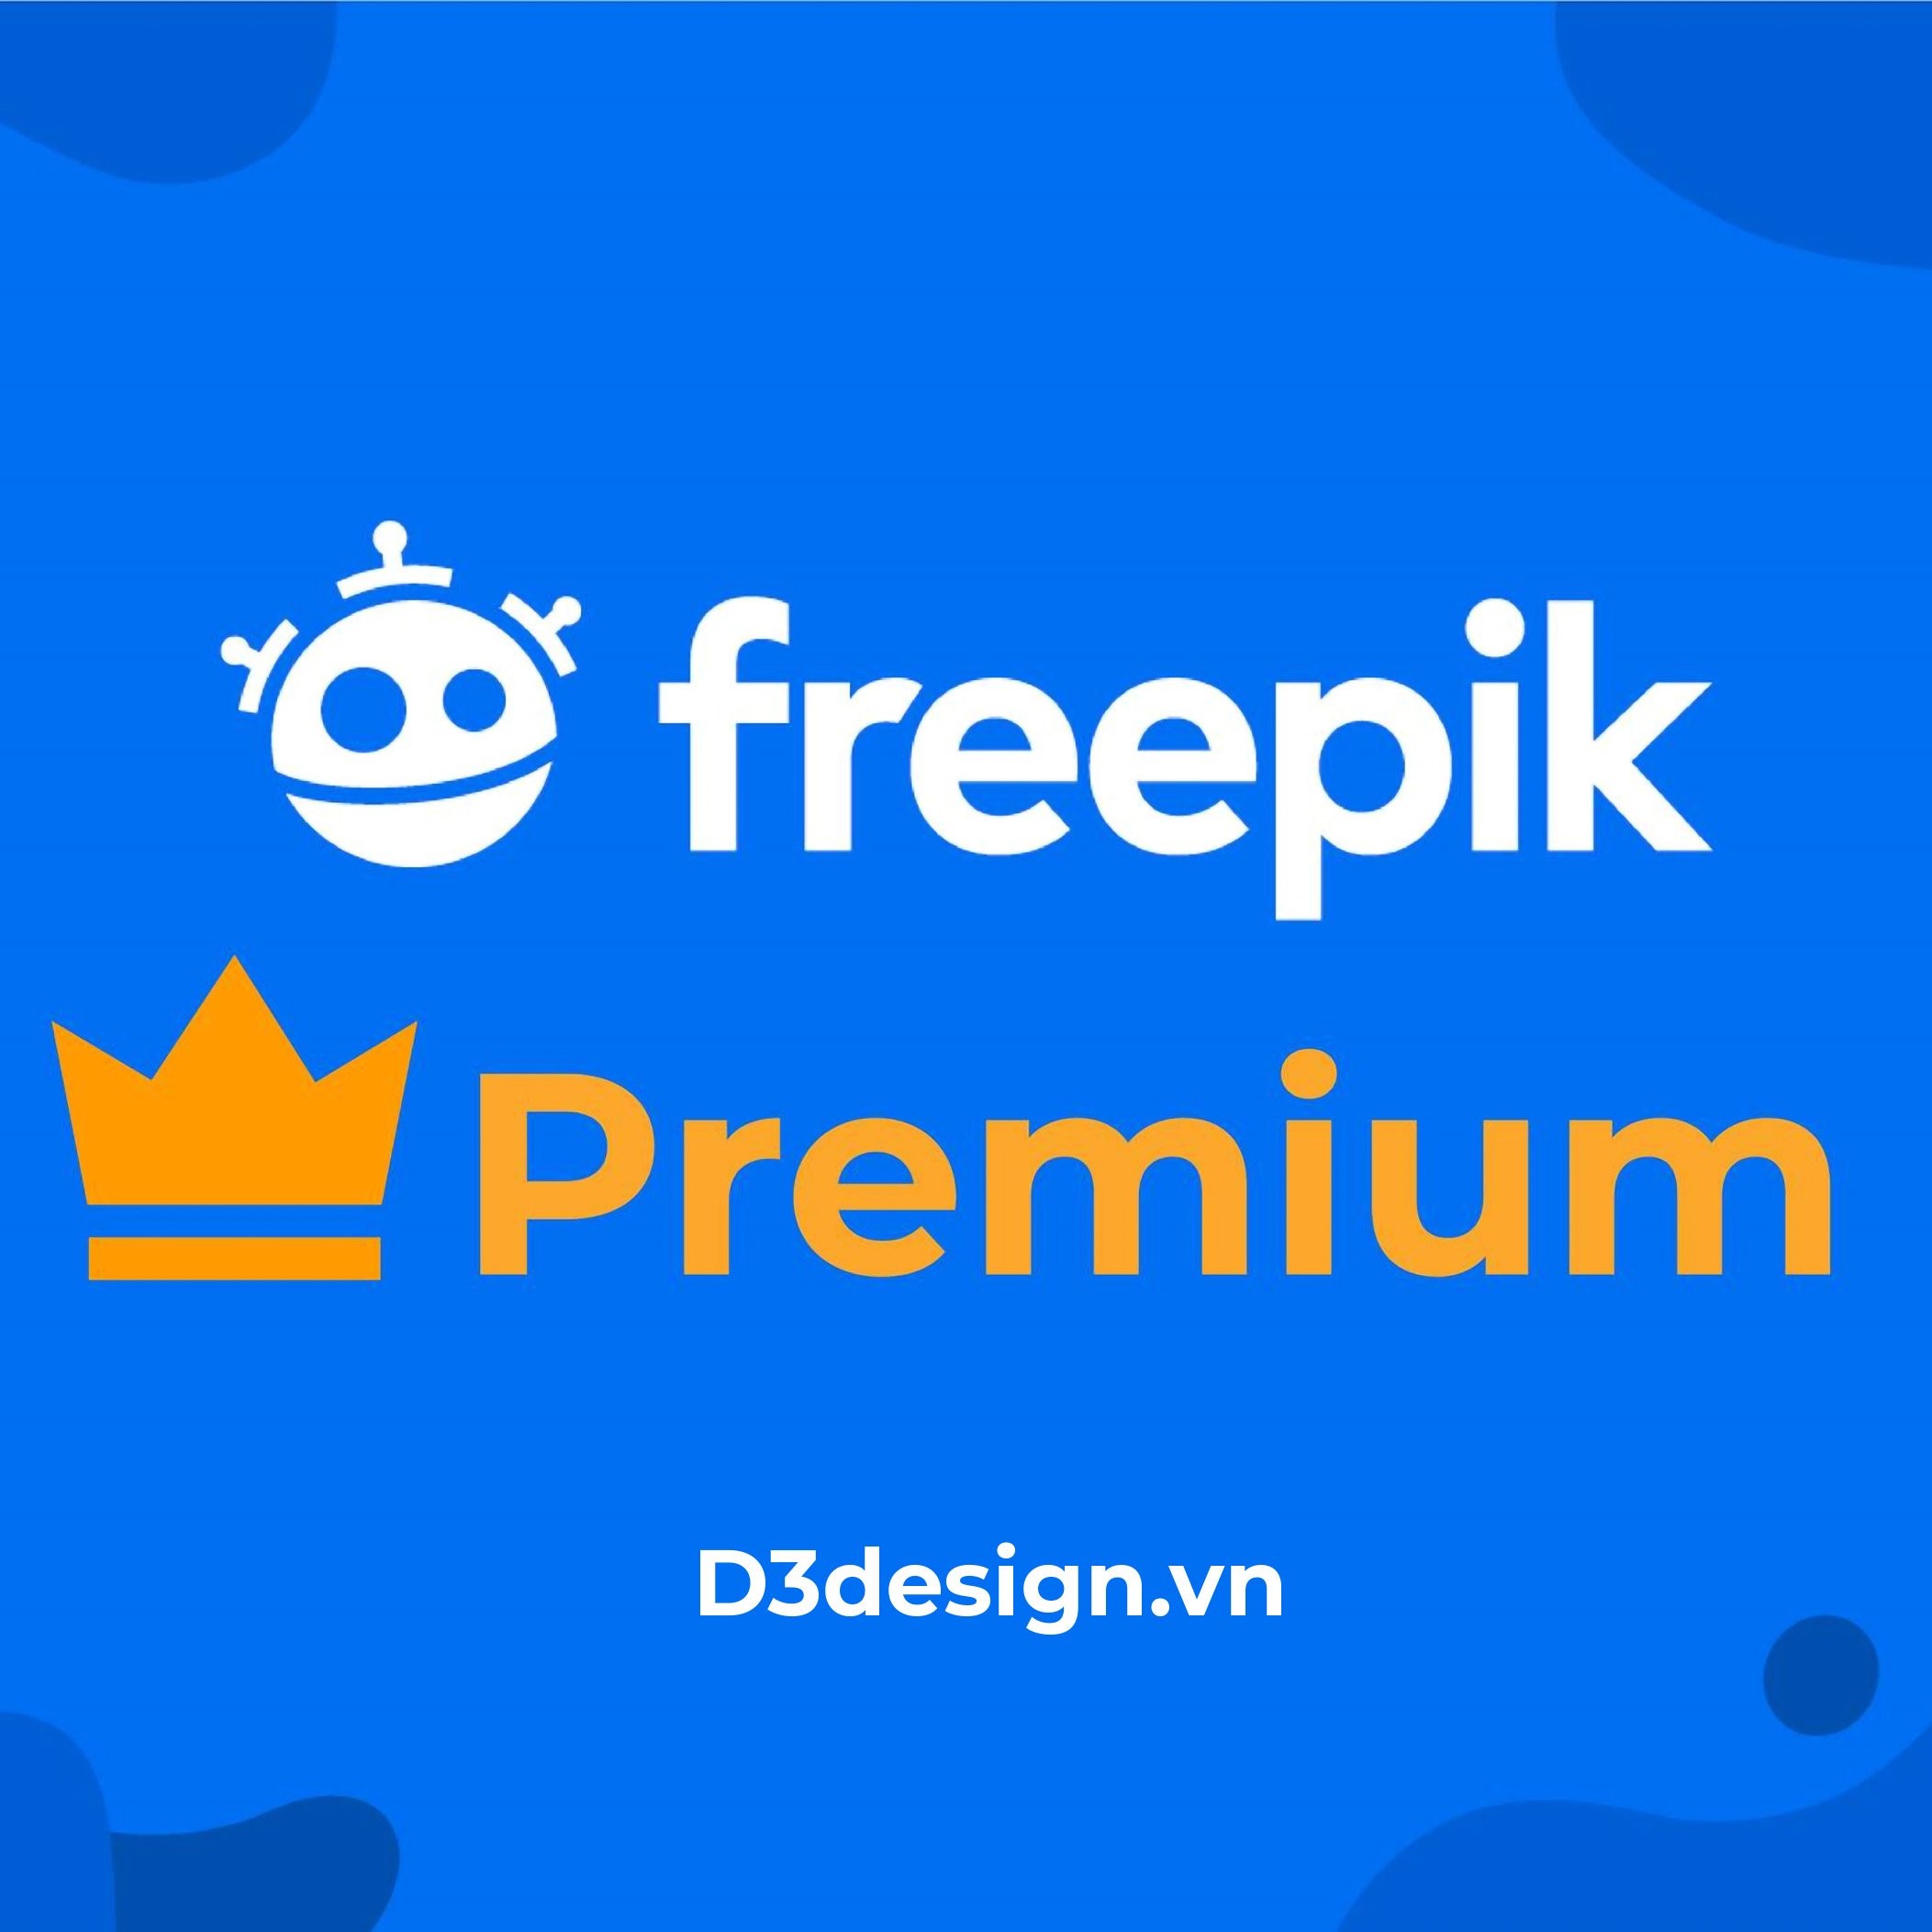  Mua Tài Khoản Freepik Premium Giá Rẻ | D3design